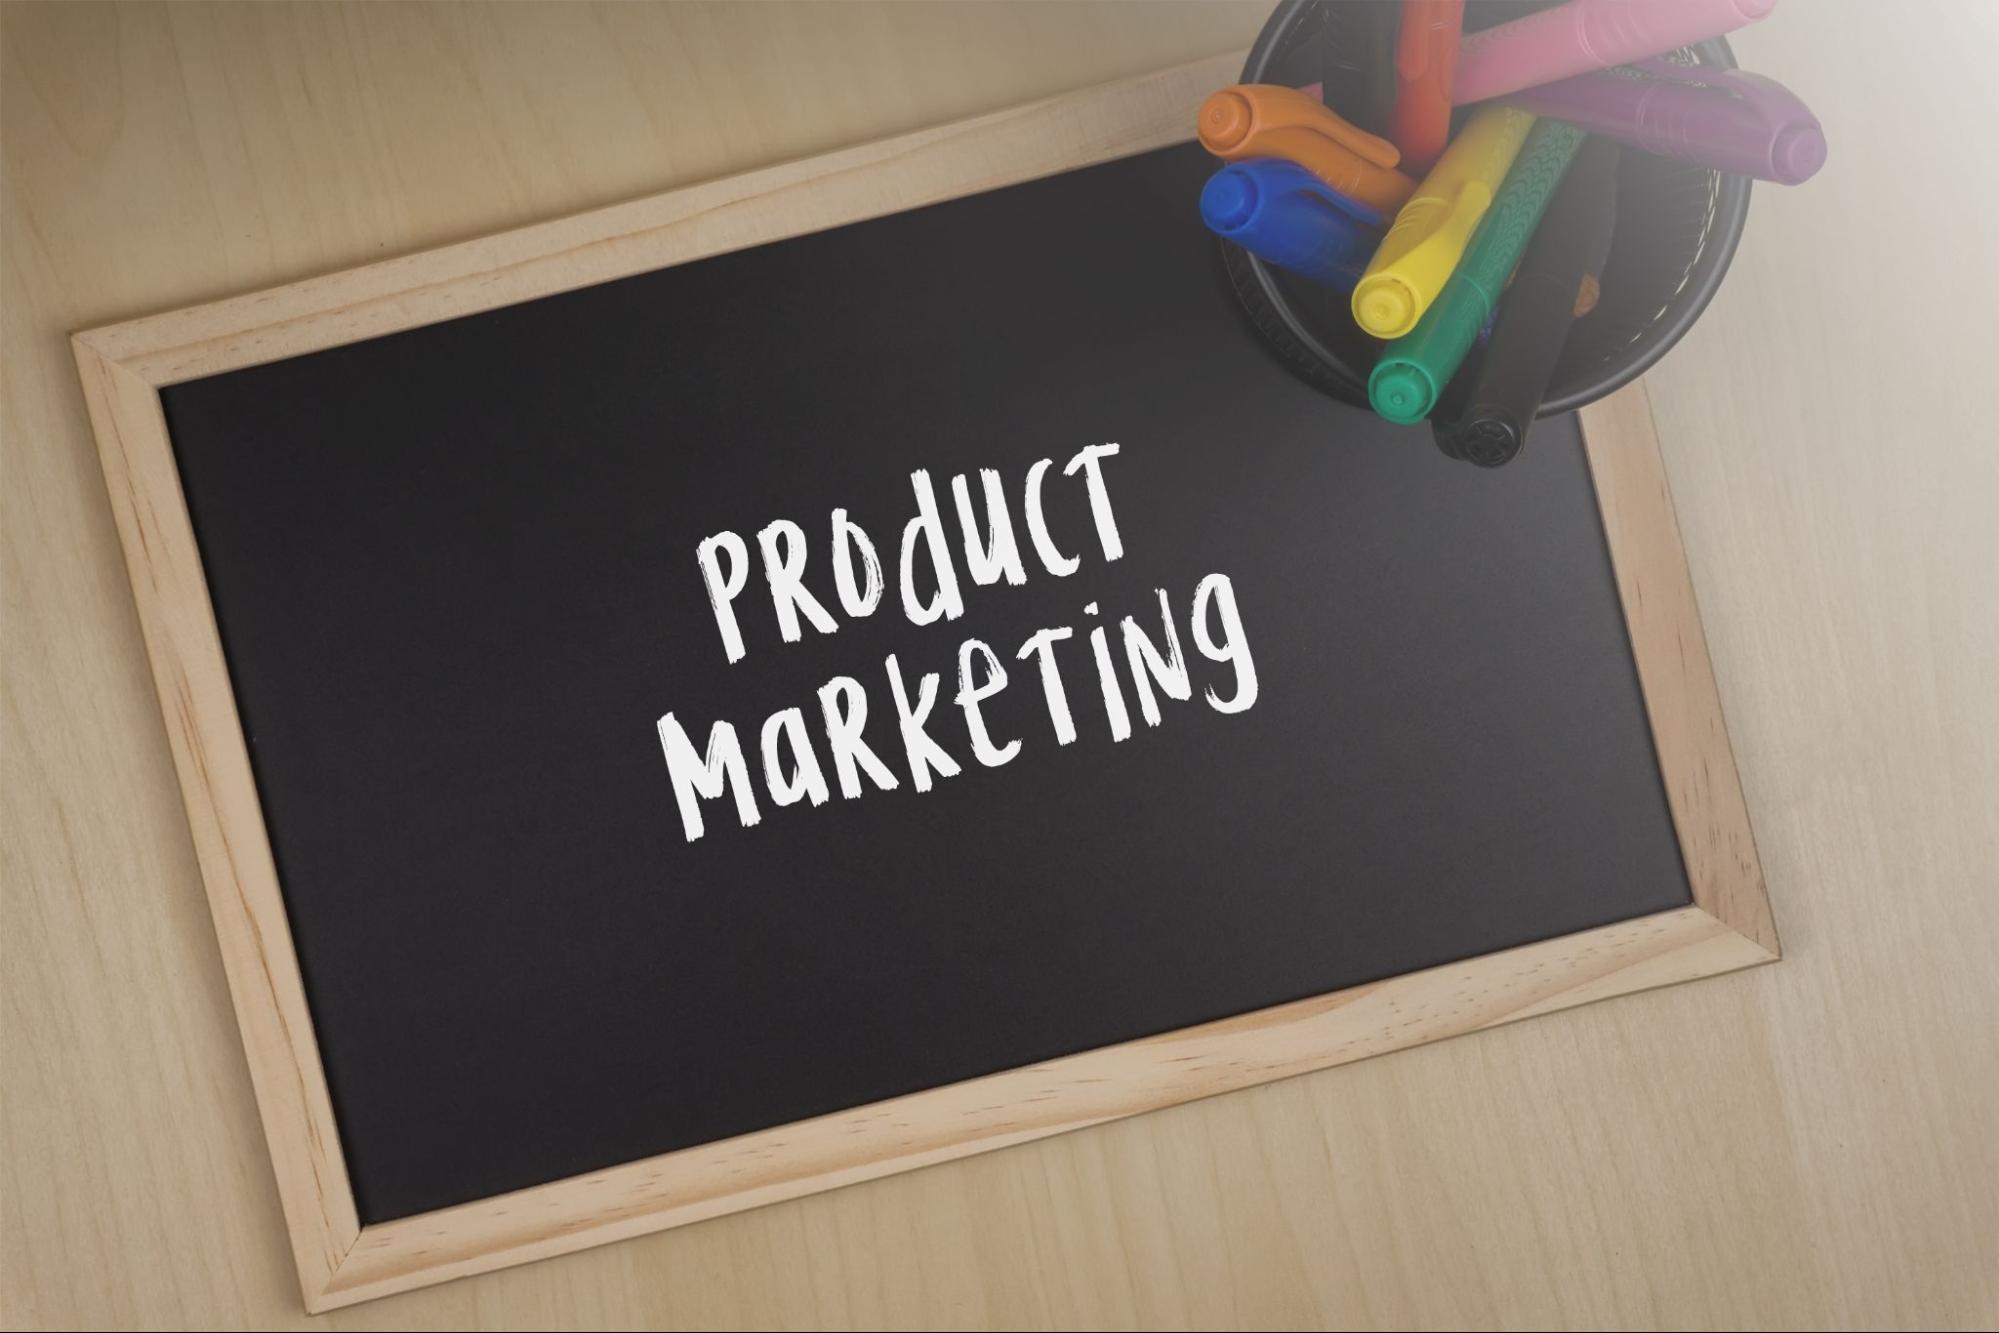 Khái niệm Product marketing